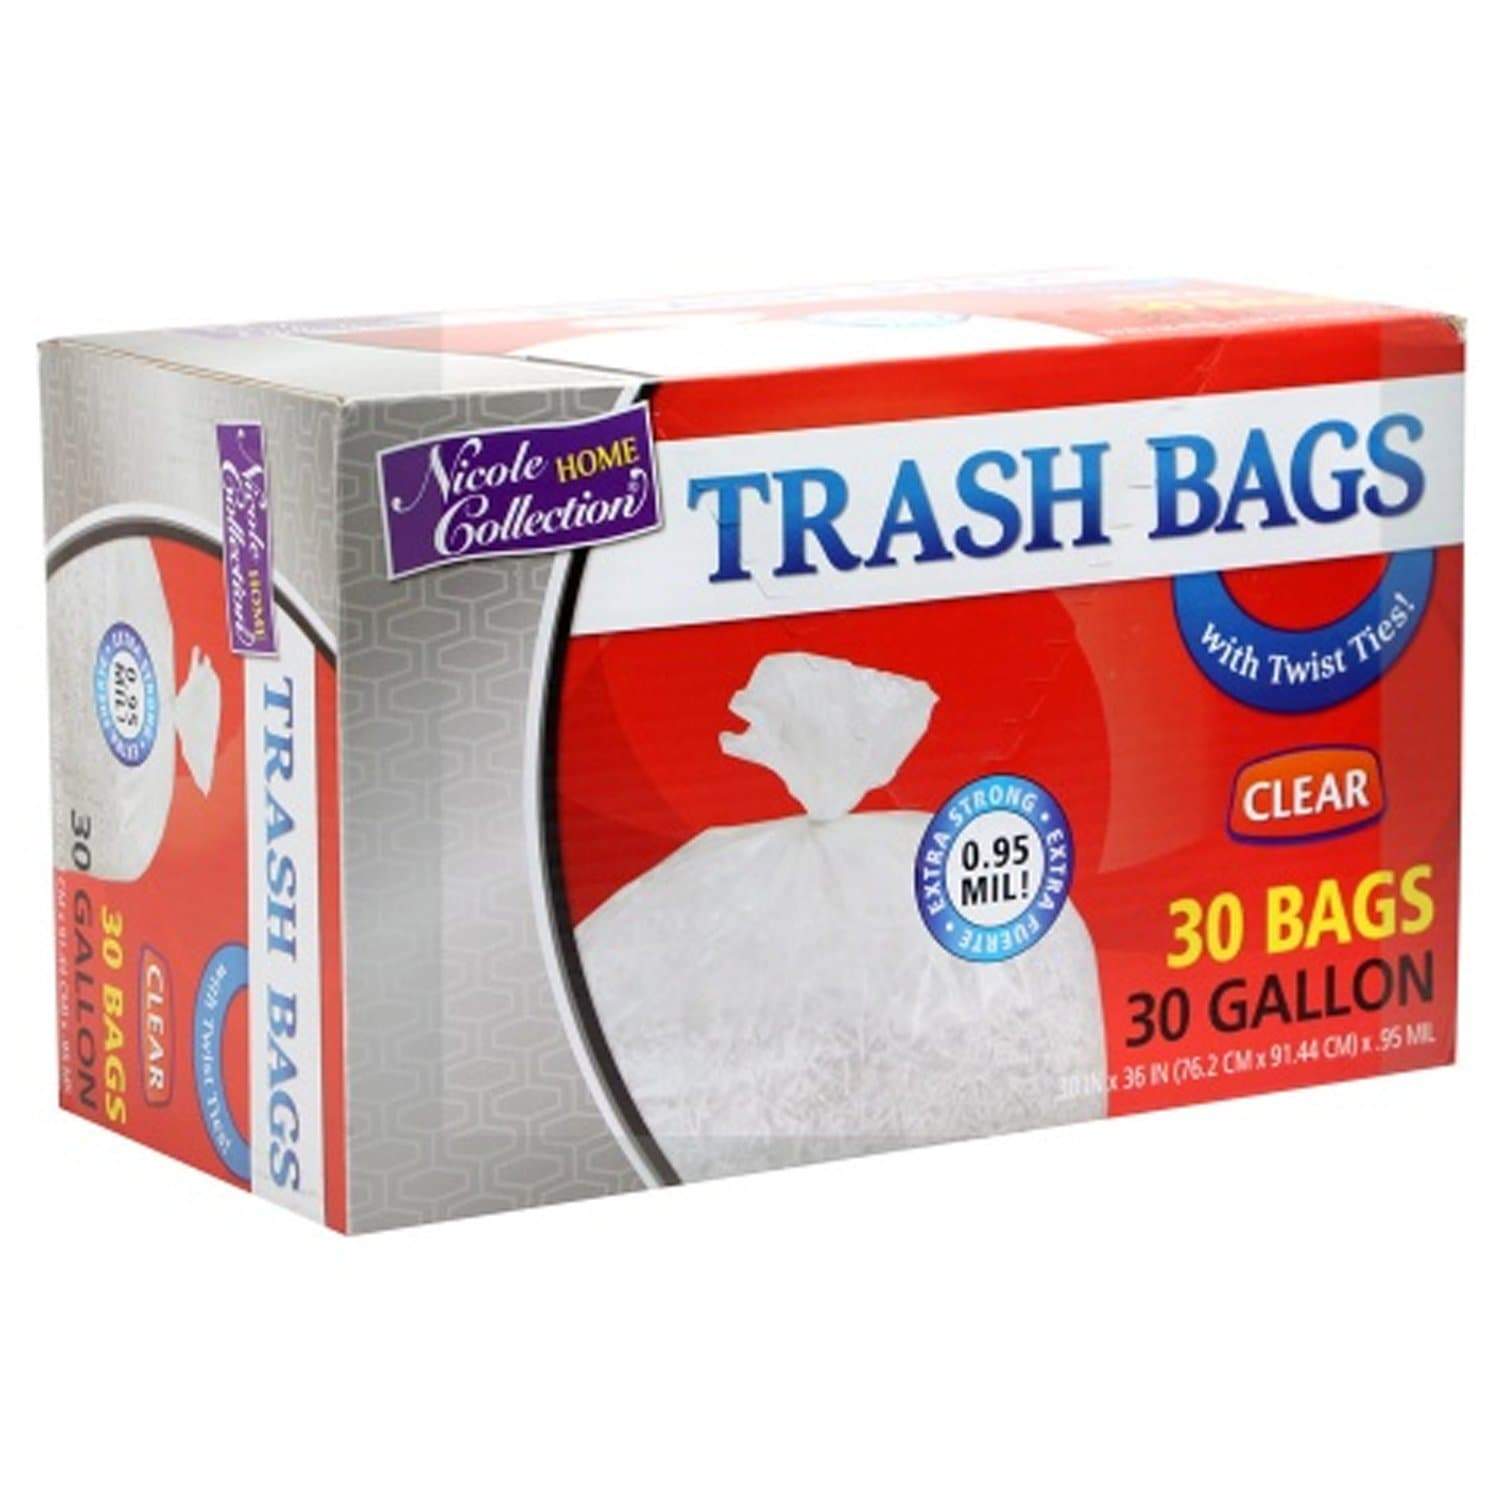 Exchange Select Flap Top Large Trash Bags, 33 Gallon, Clear, 20 Pk., Trash  Bags, Household